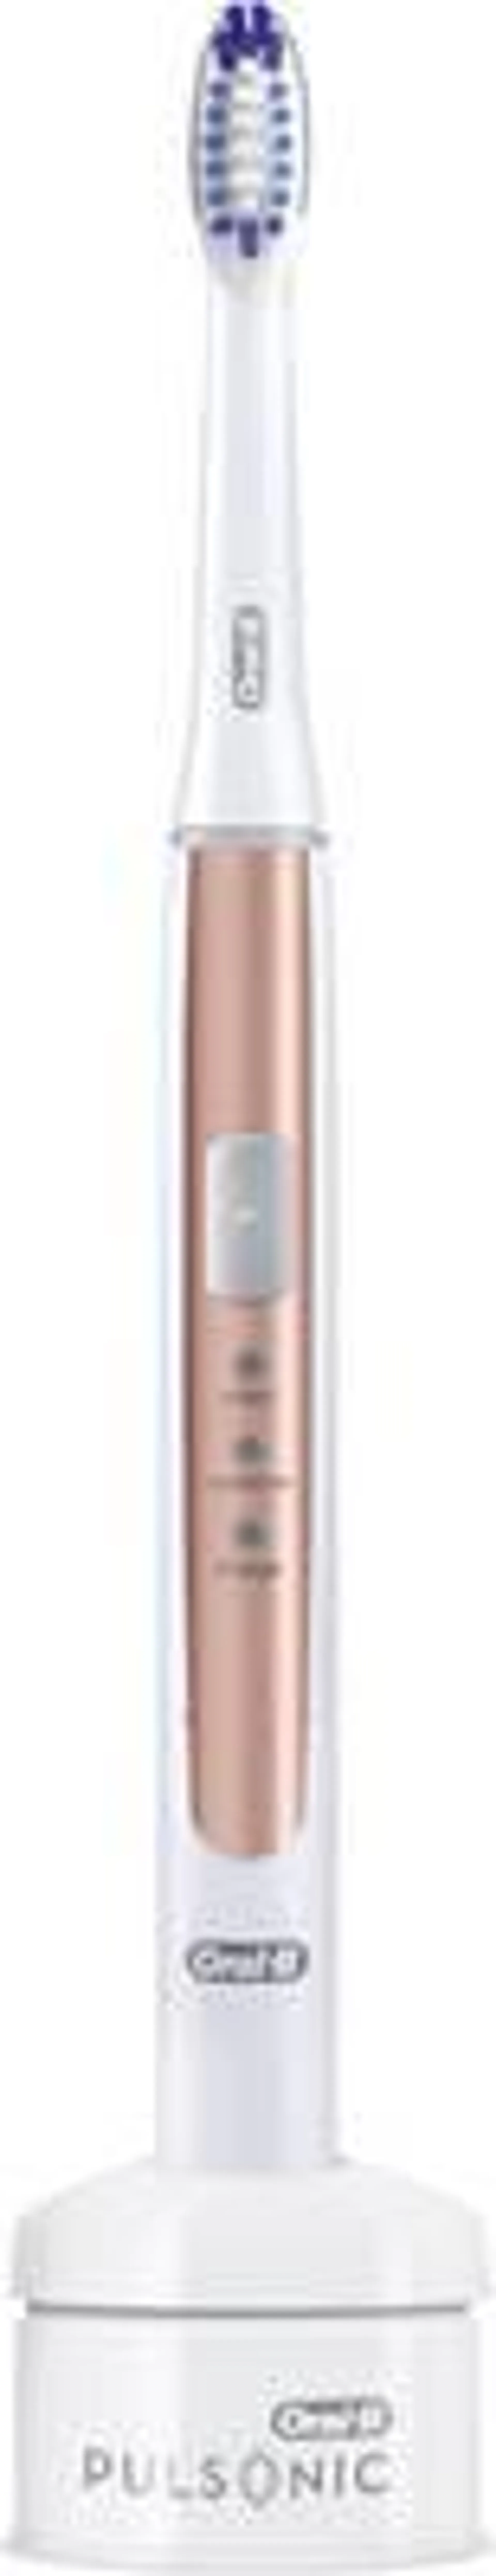 Oral-B Pulsonic Slim 1100 80312240 Electric toothbrush Sonic toothbrush Rose Gold